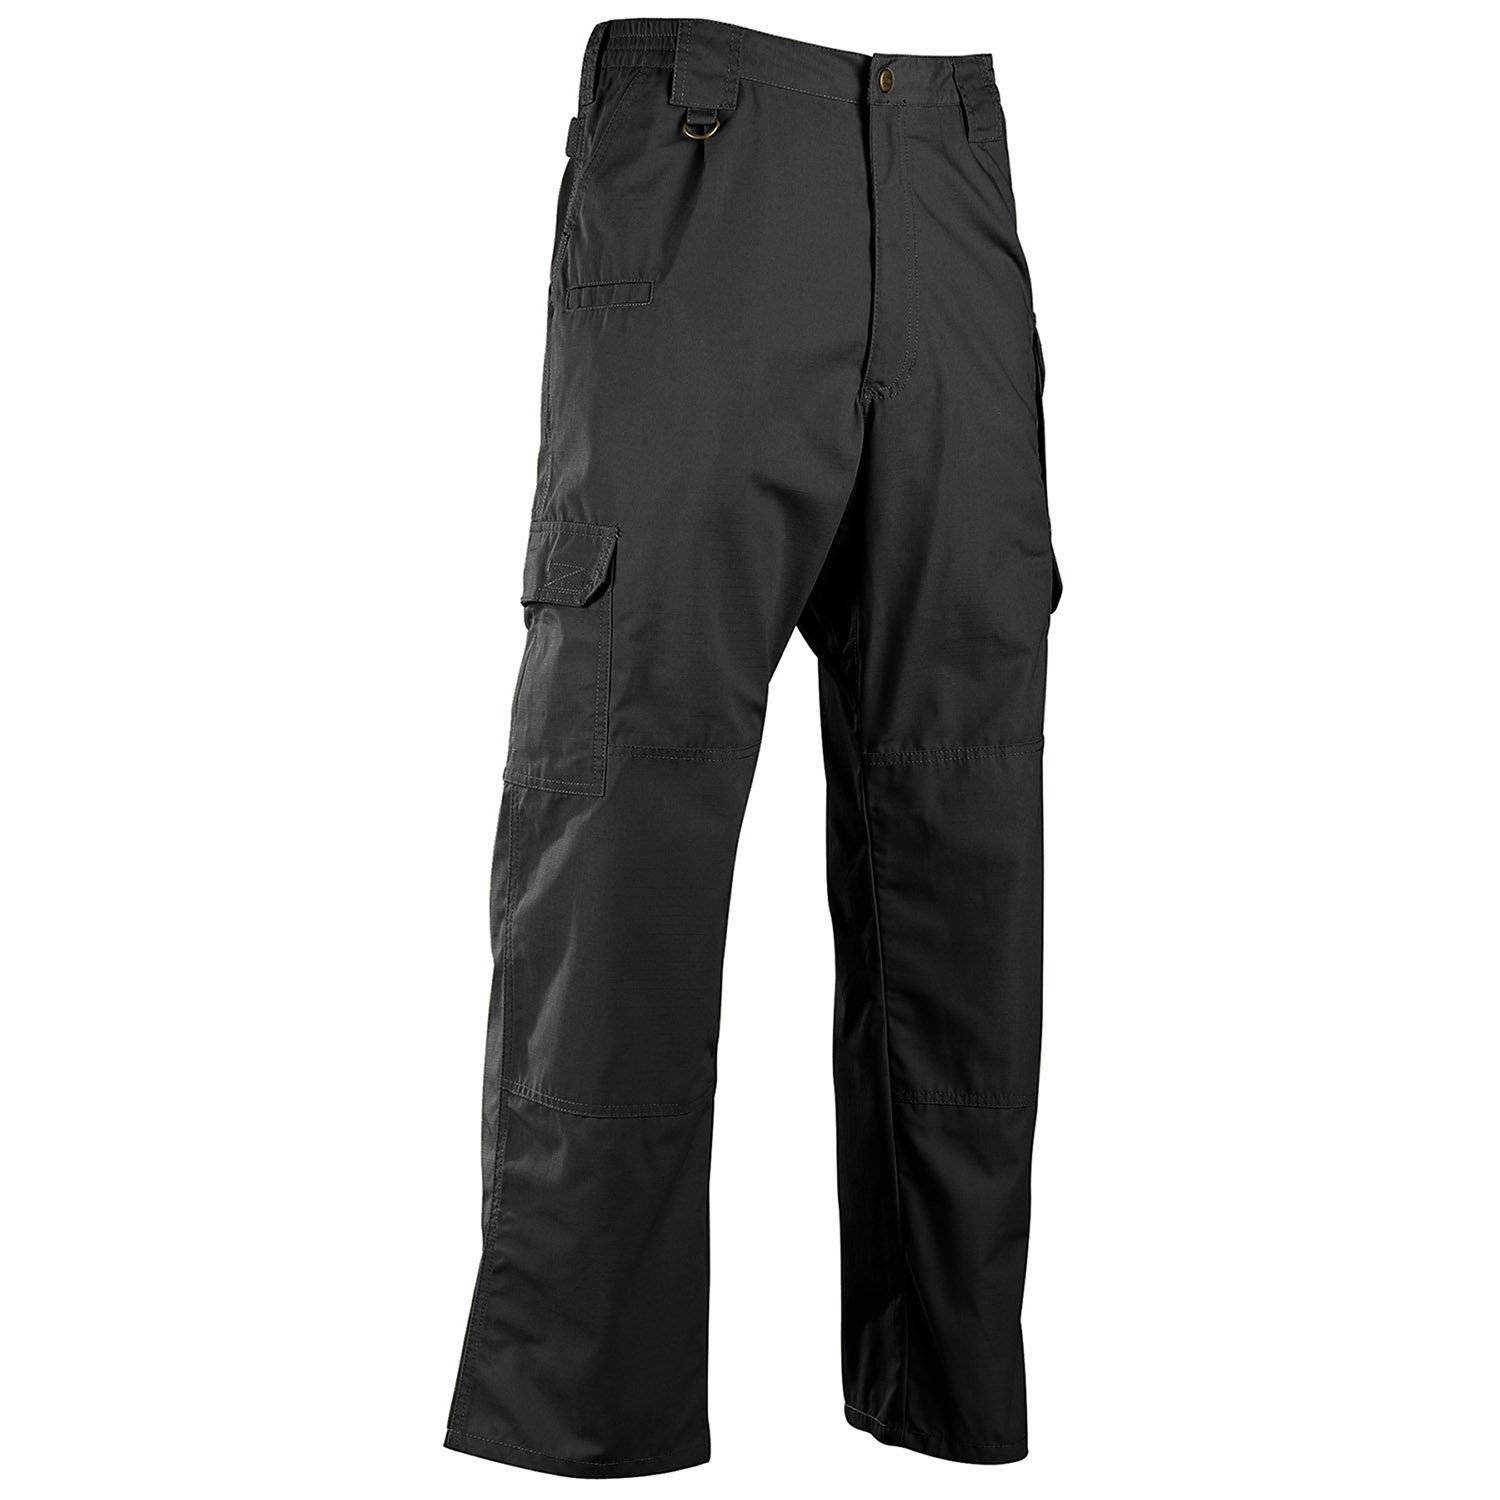 5.11 Tactical Men's Ripstop TDU Pants Style 74003 Waist XS-4XL Short-Long Inseam 